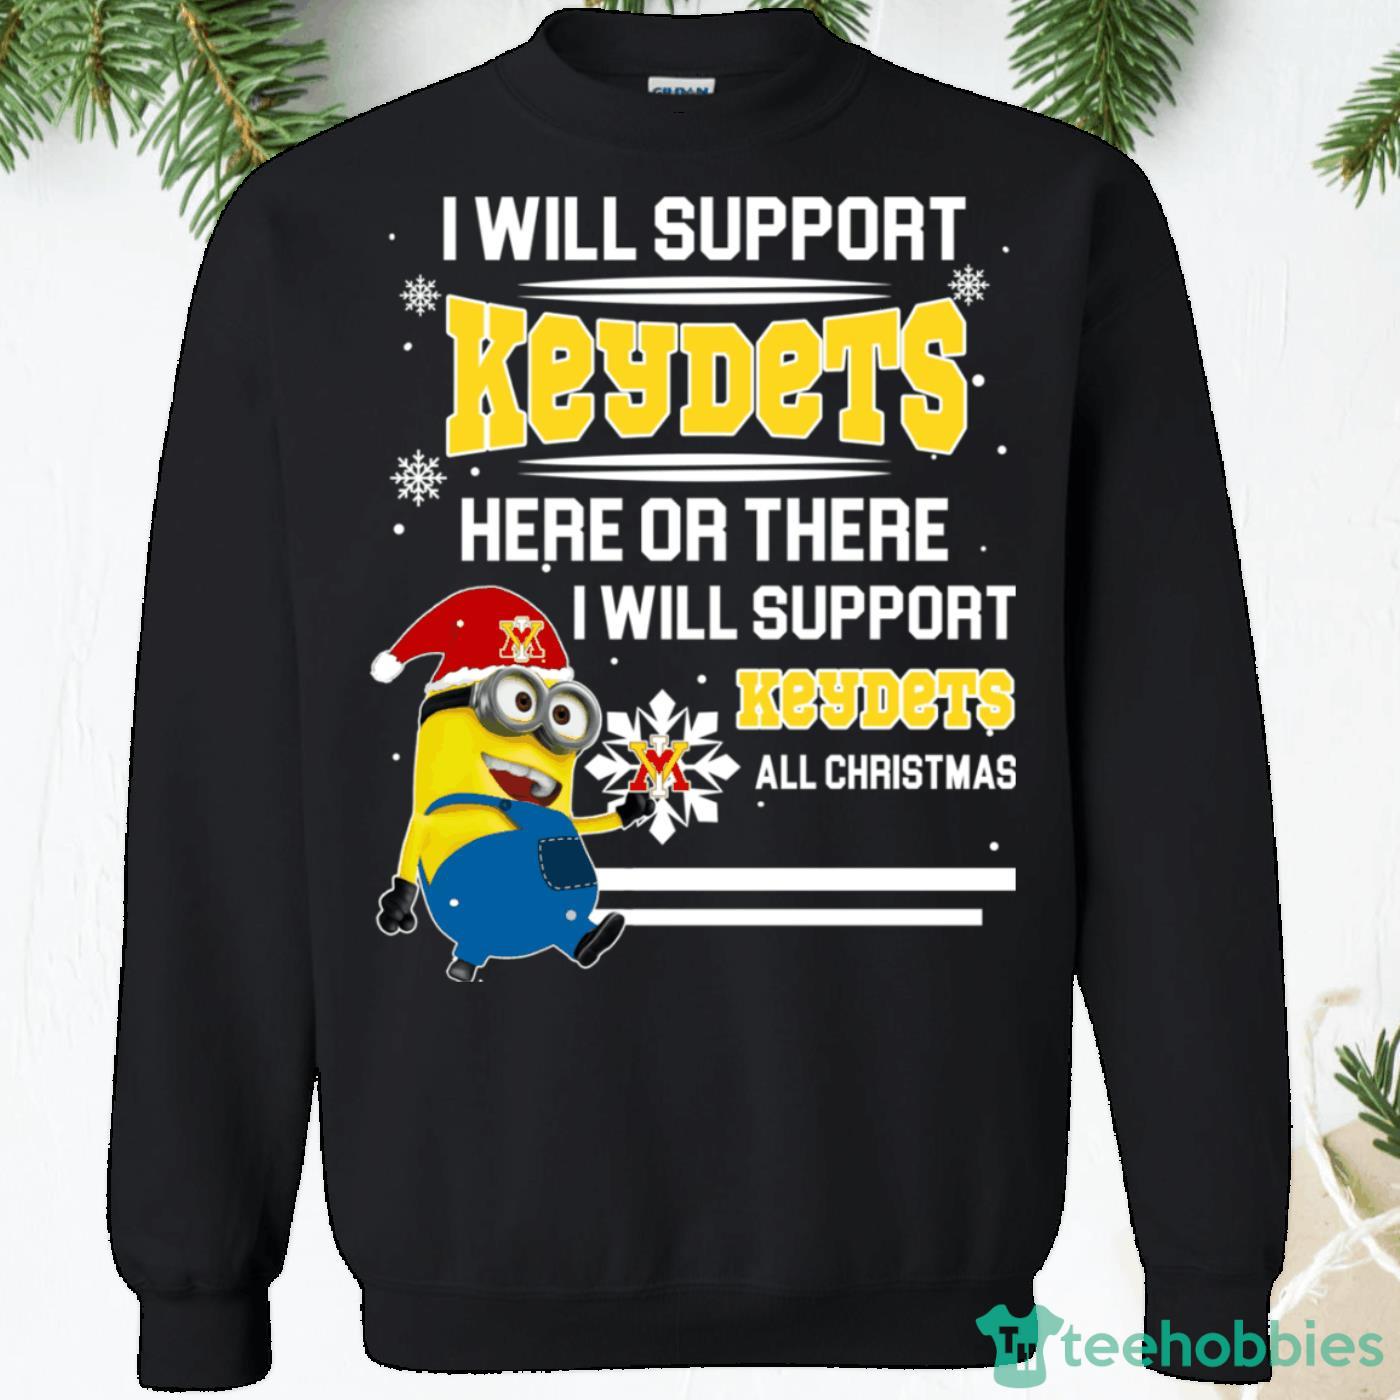 Keydets Minion Christmas Sweatshirt Product Photo 1